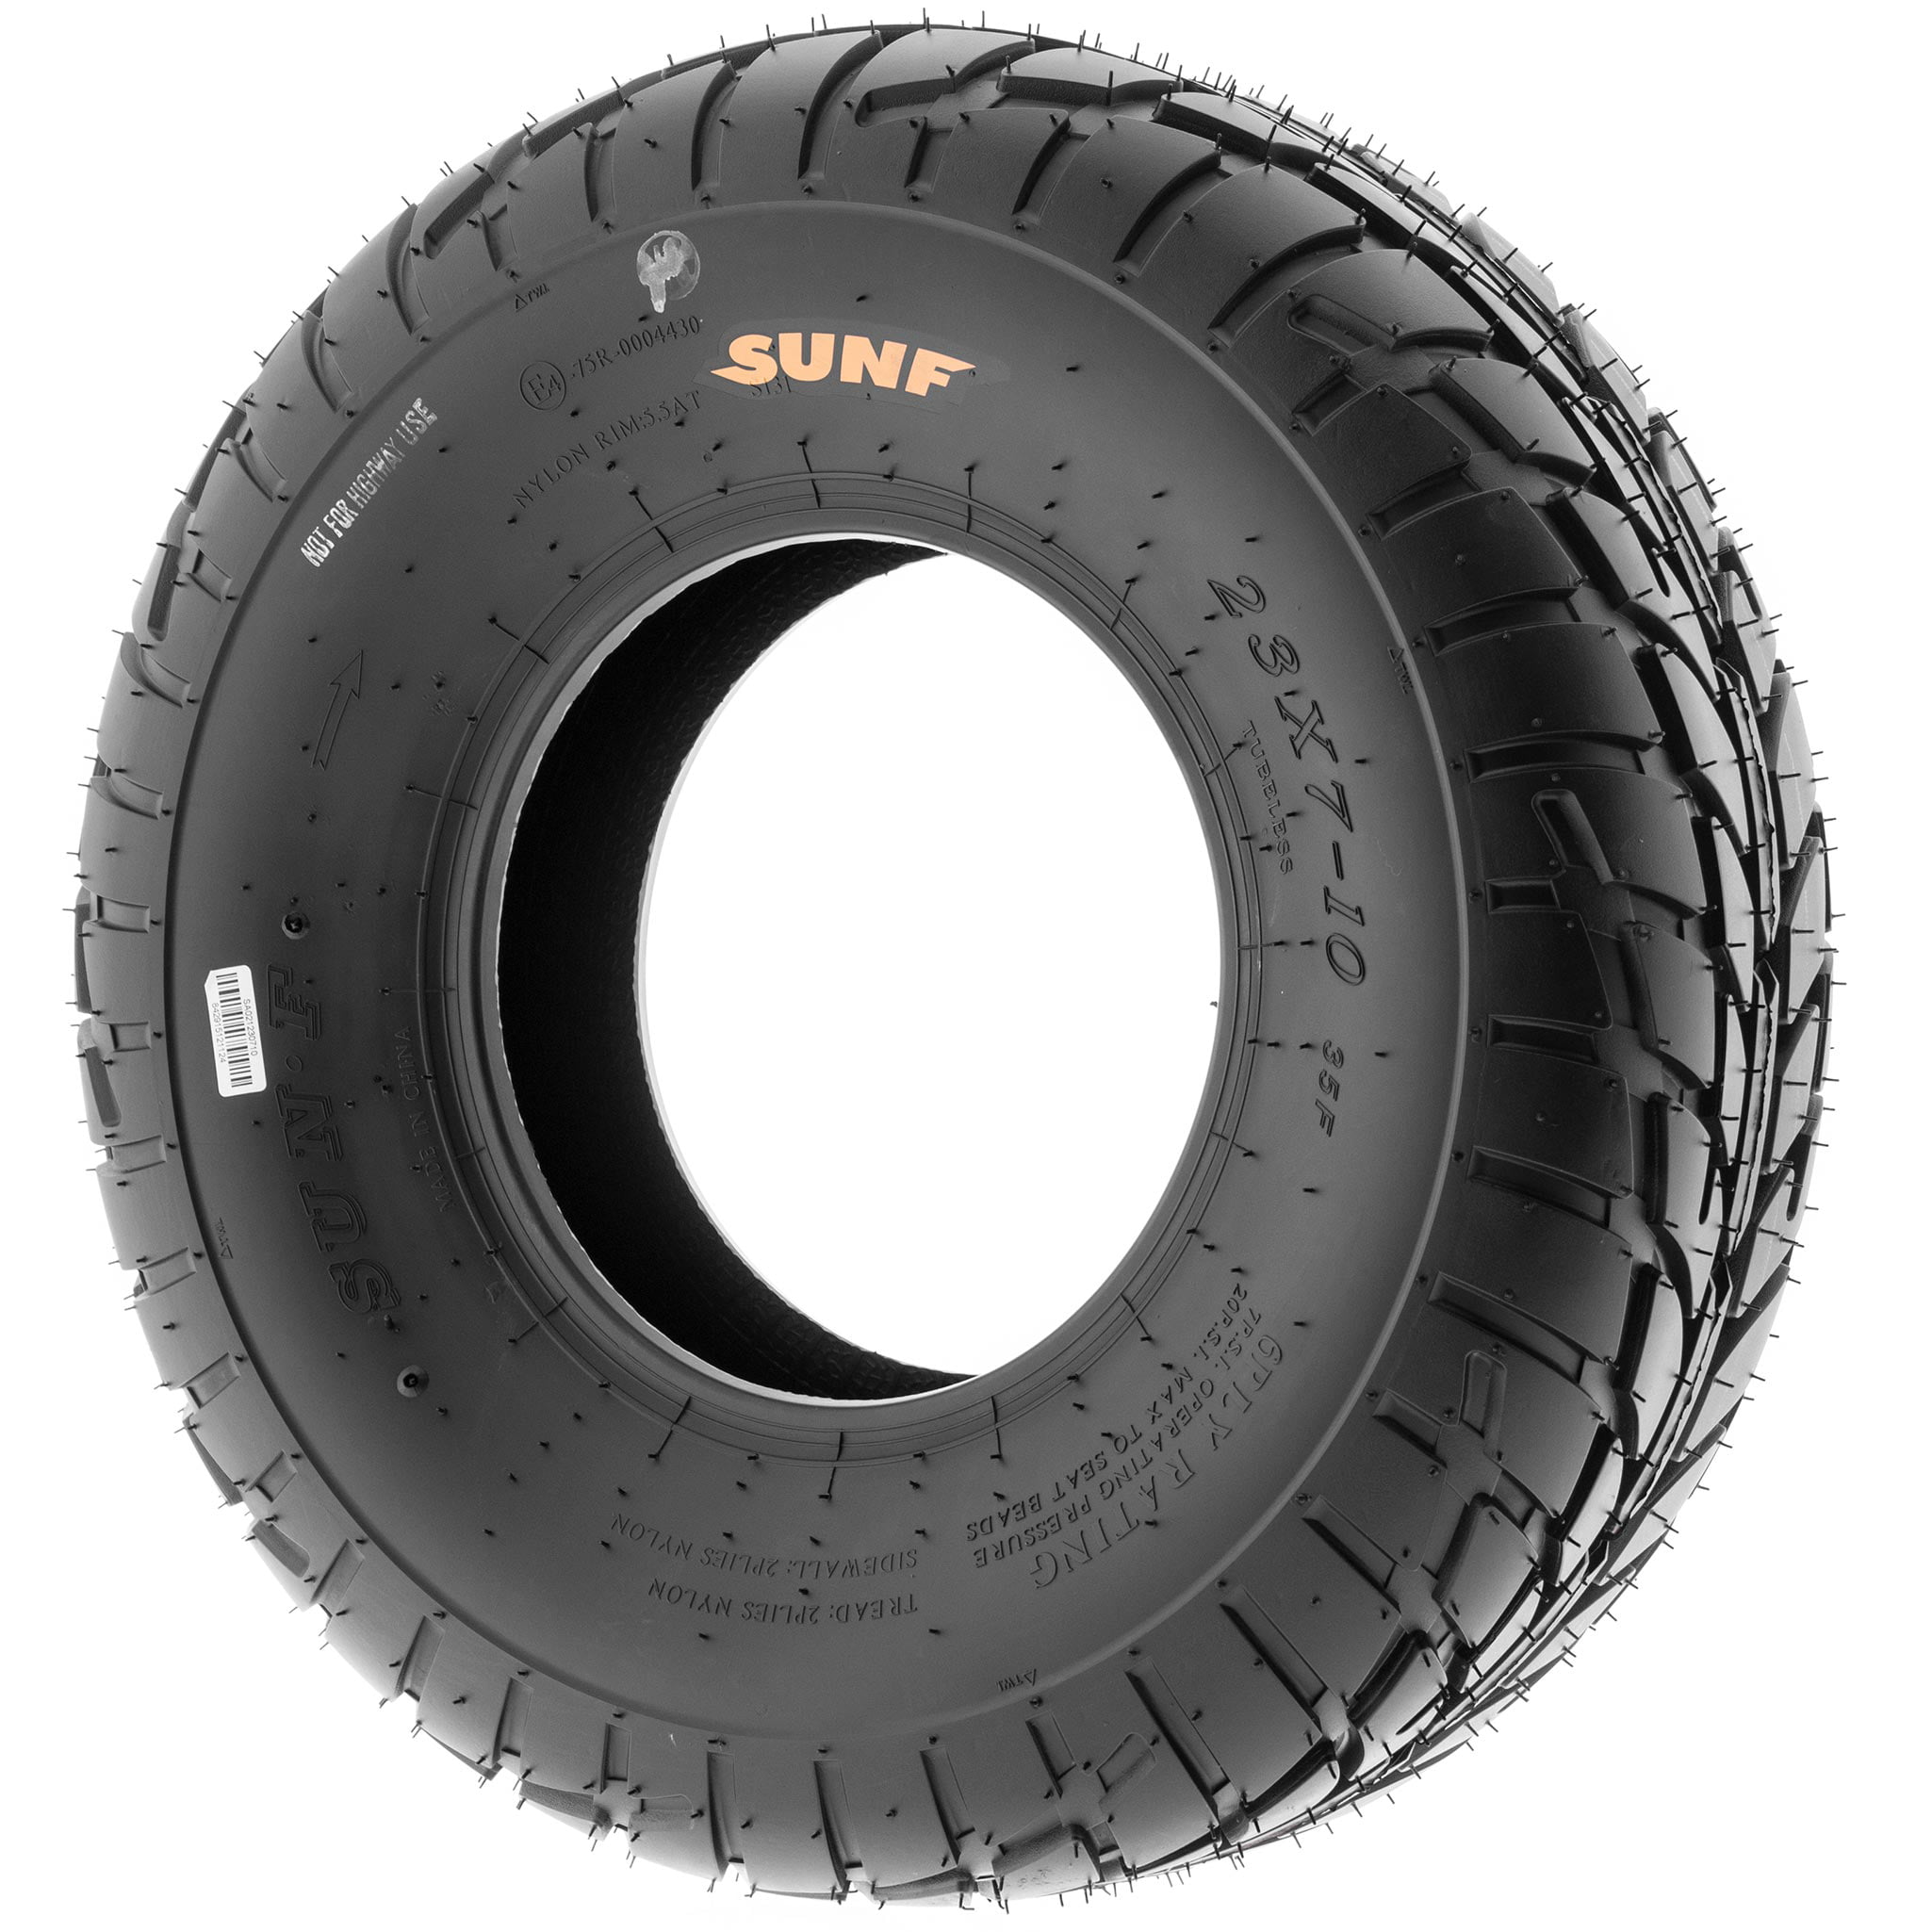 Bundle SunF 21x7-10 22x10-10  Sport ATV Tires 6 PR Tubeless  A021 